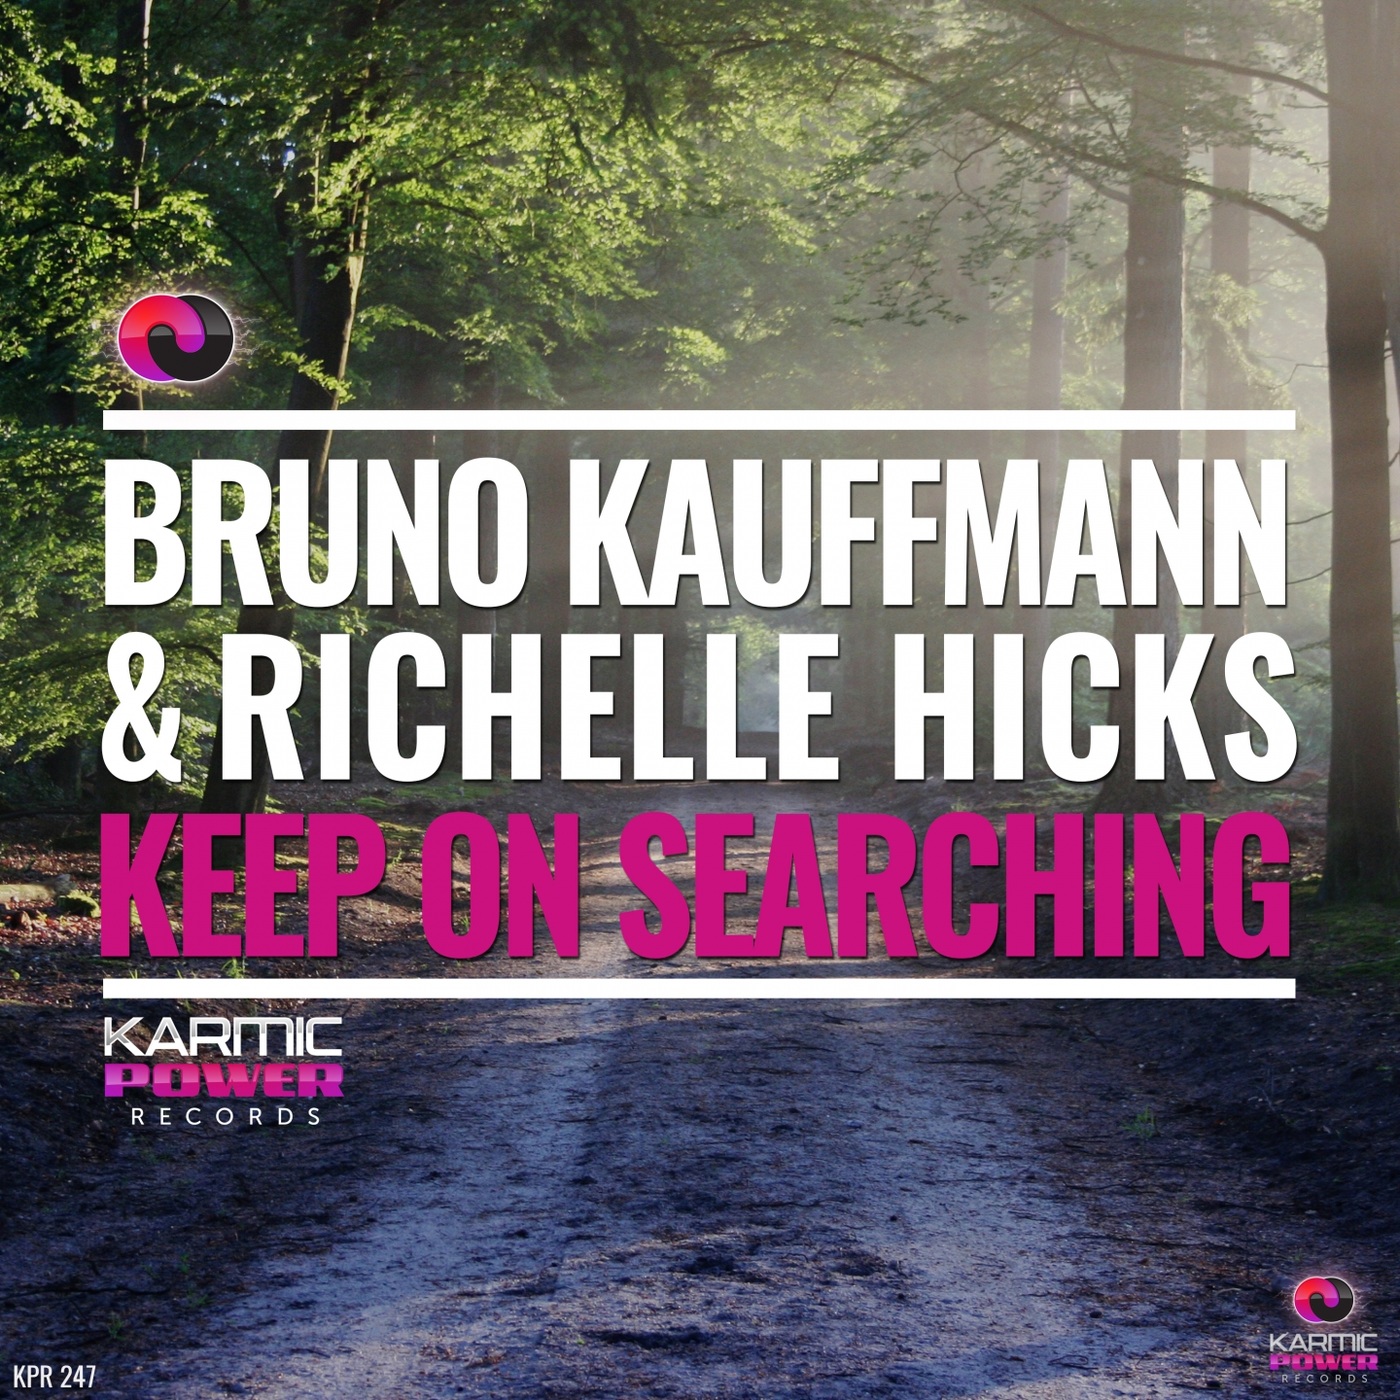 Bruno Kauffmann ft Richelle Hicks - Keep on Searching / Karmic Power